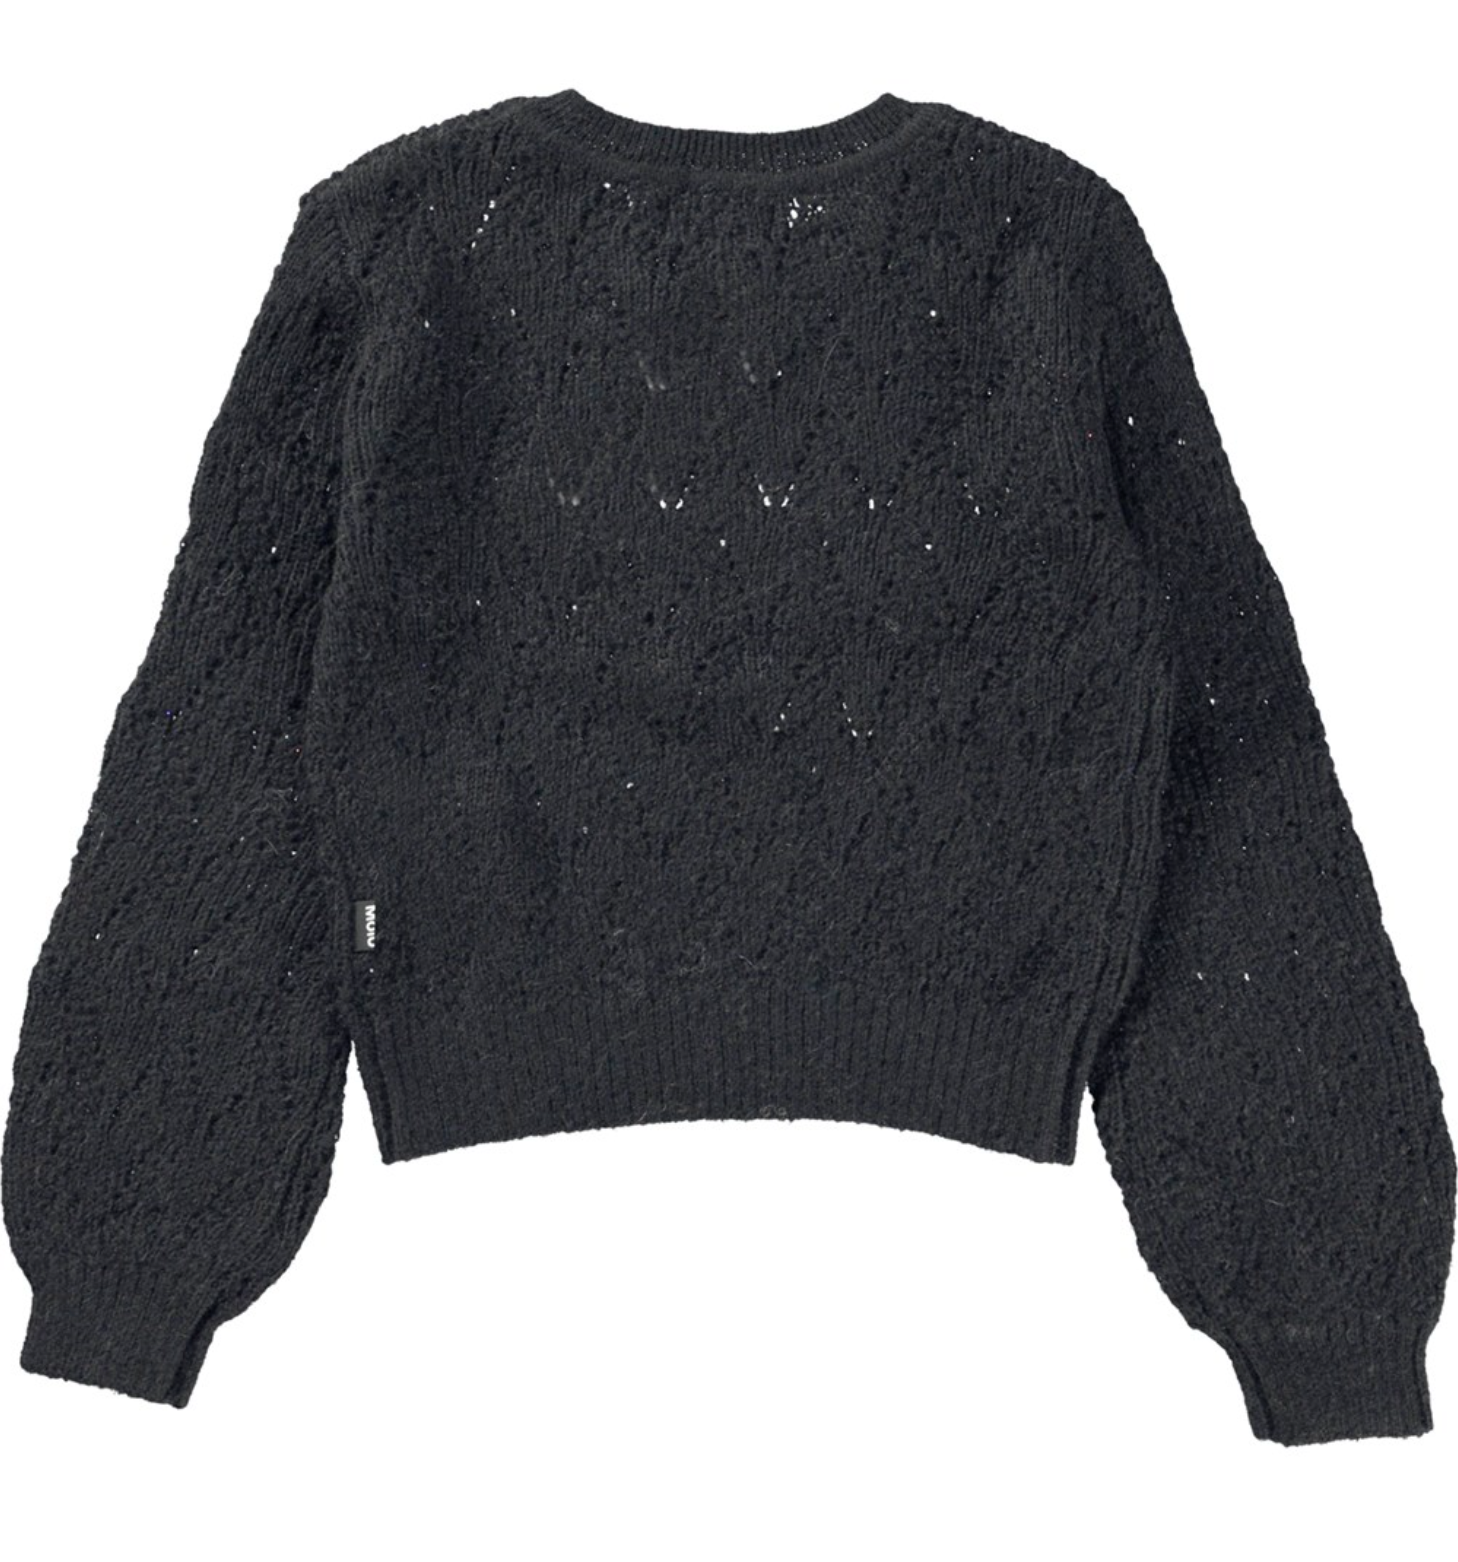 Molo Ginger Sweater - Black